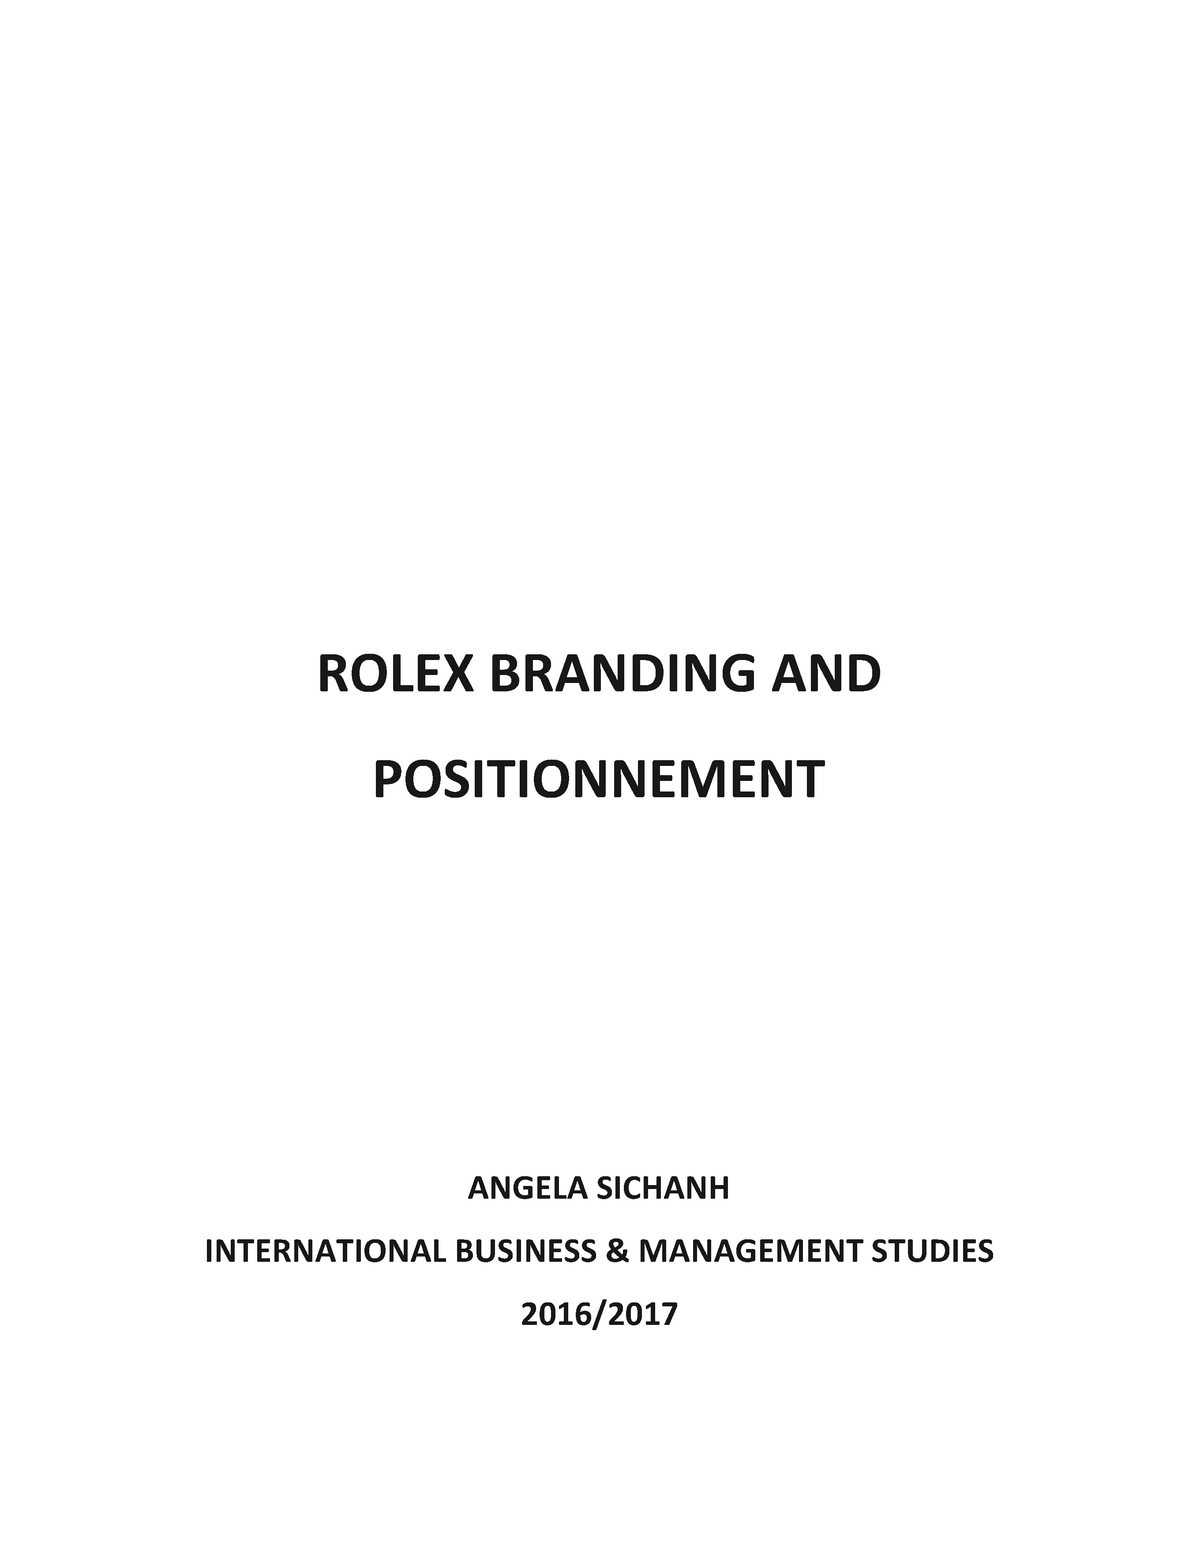 Rolex branding and positionnement - ROLEX BRANDING AND POSITIONNEMENT ...